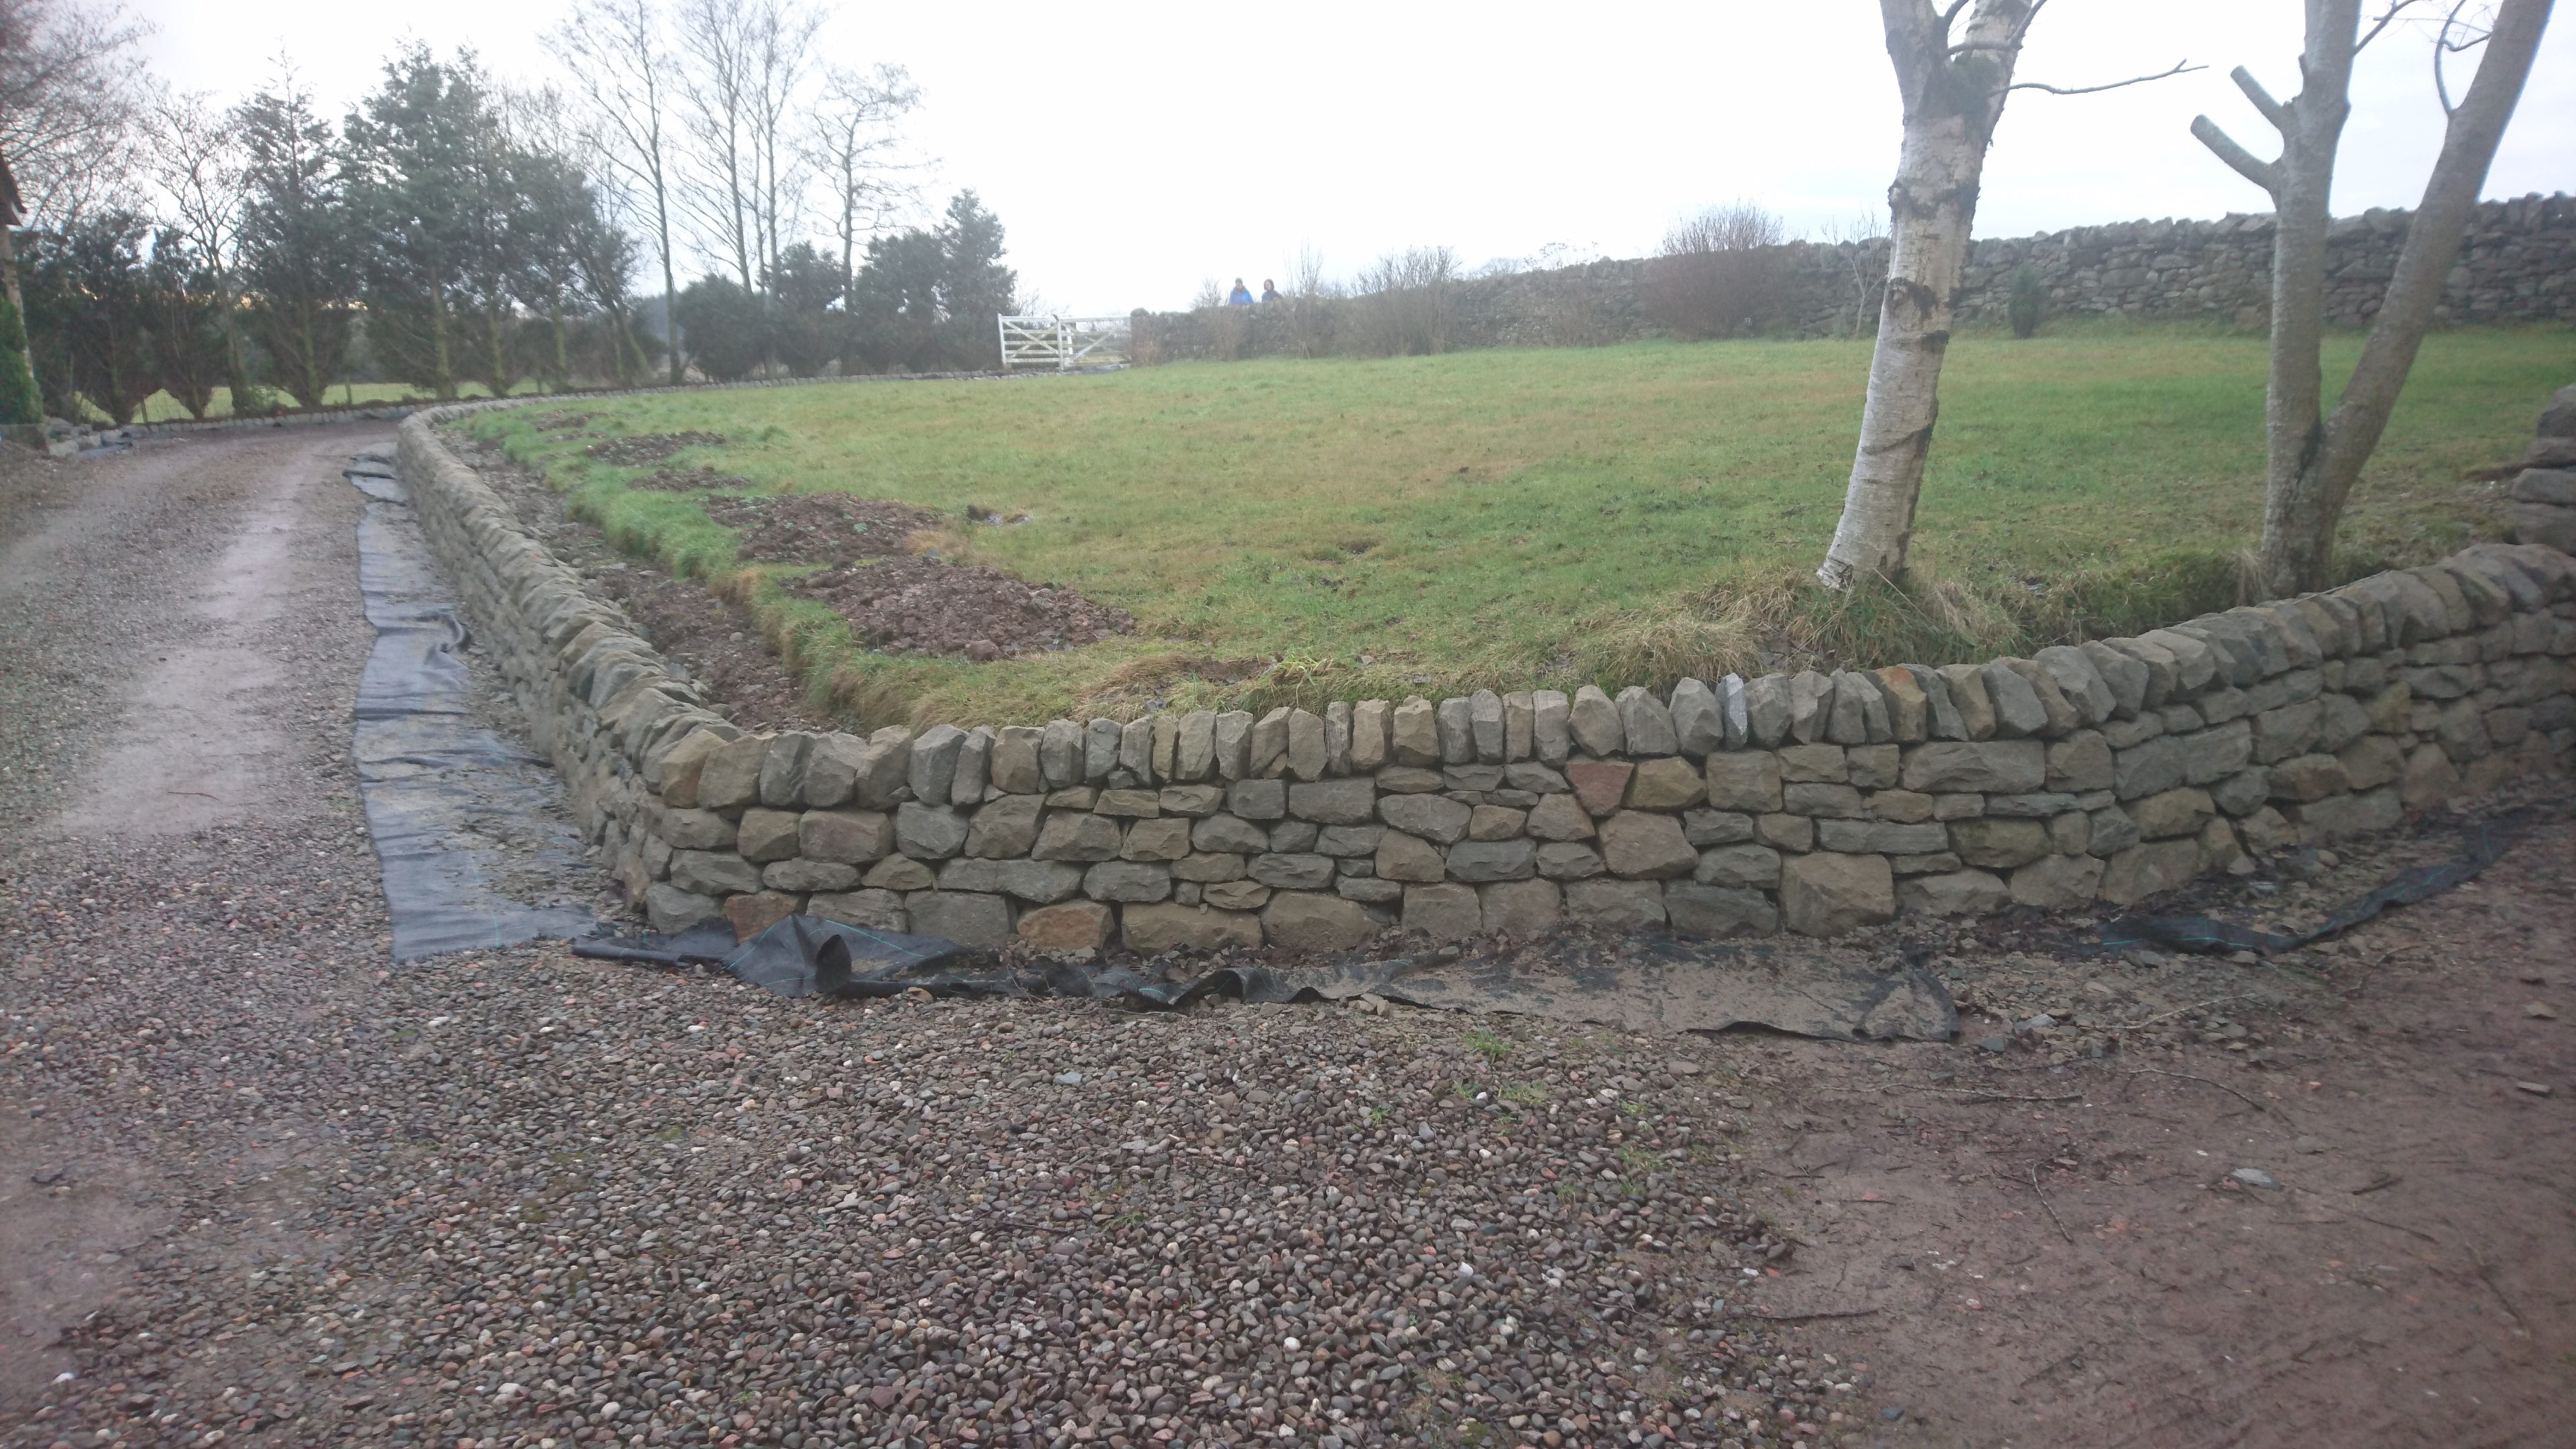 Dry stone retaining walls